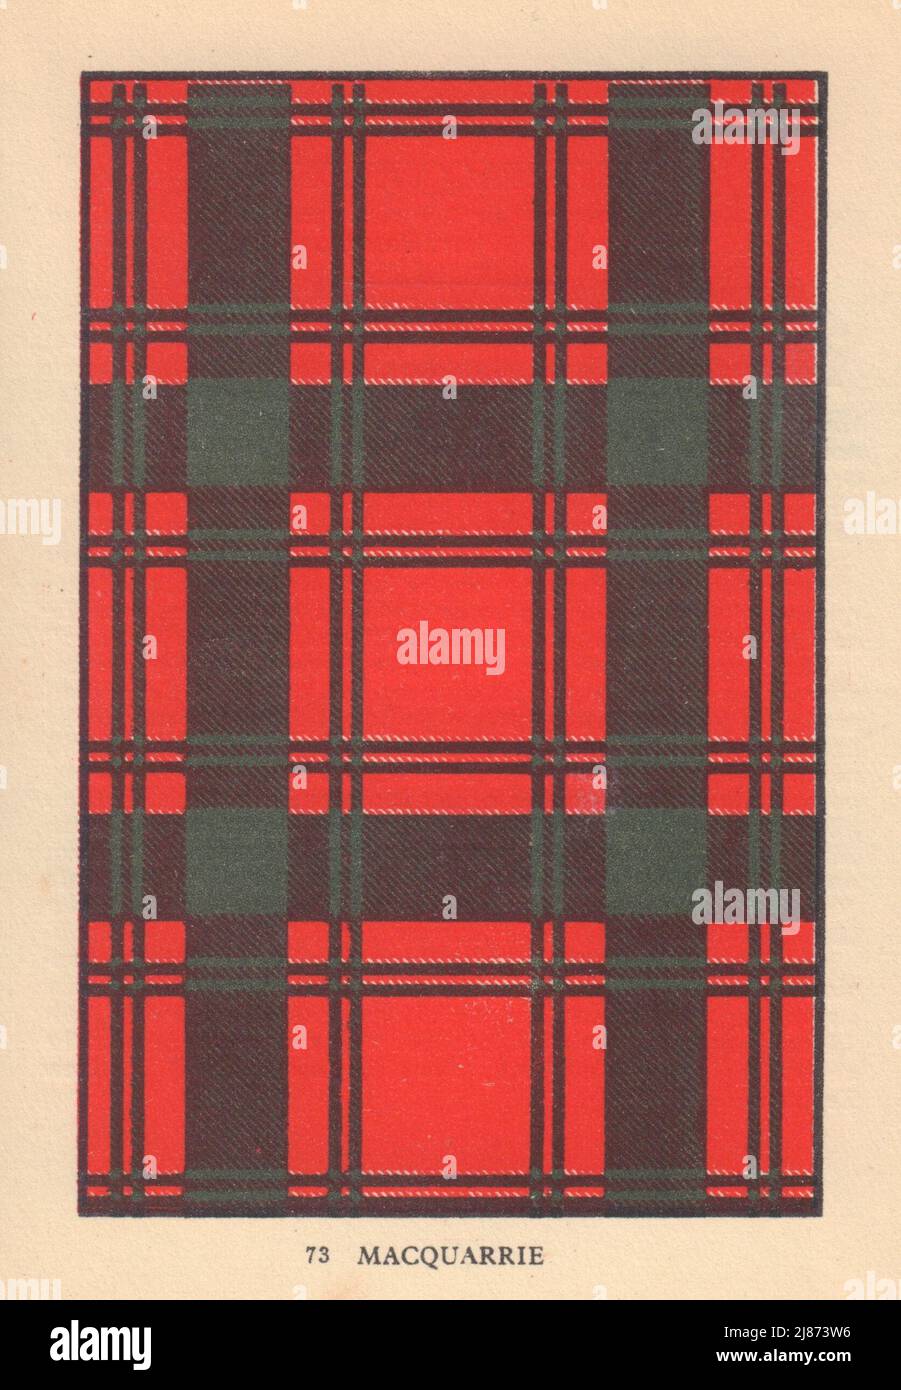 Macquarrie. Scottish Clan Tartan. SMALL 8x11.5cm 1937 old vintage print Stock Photo